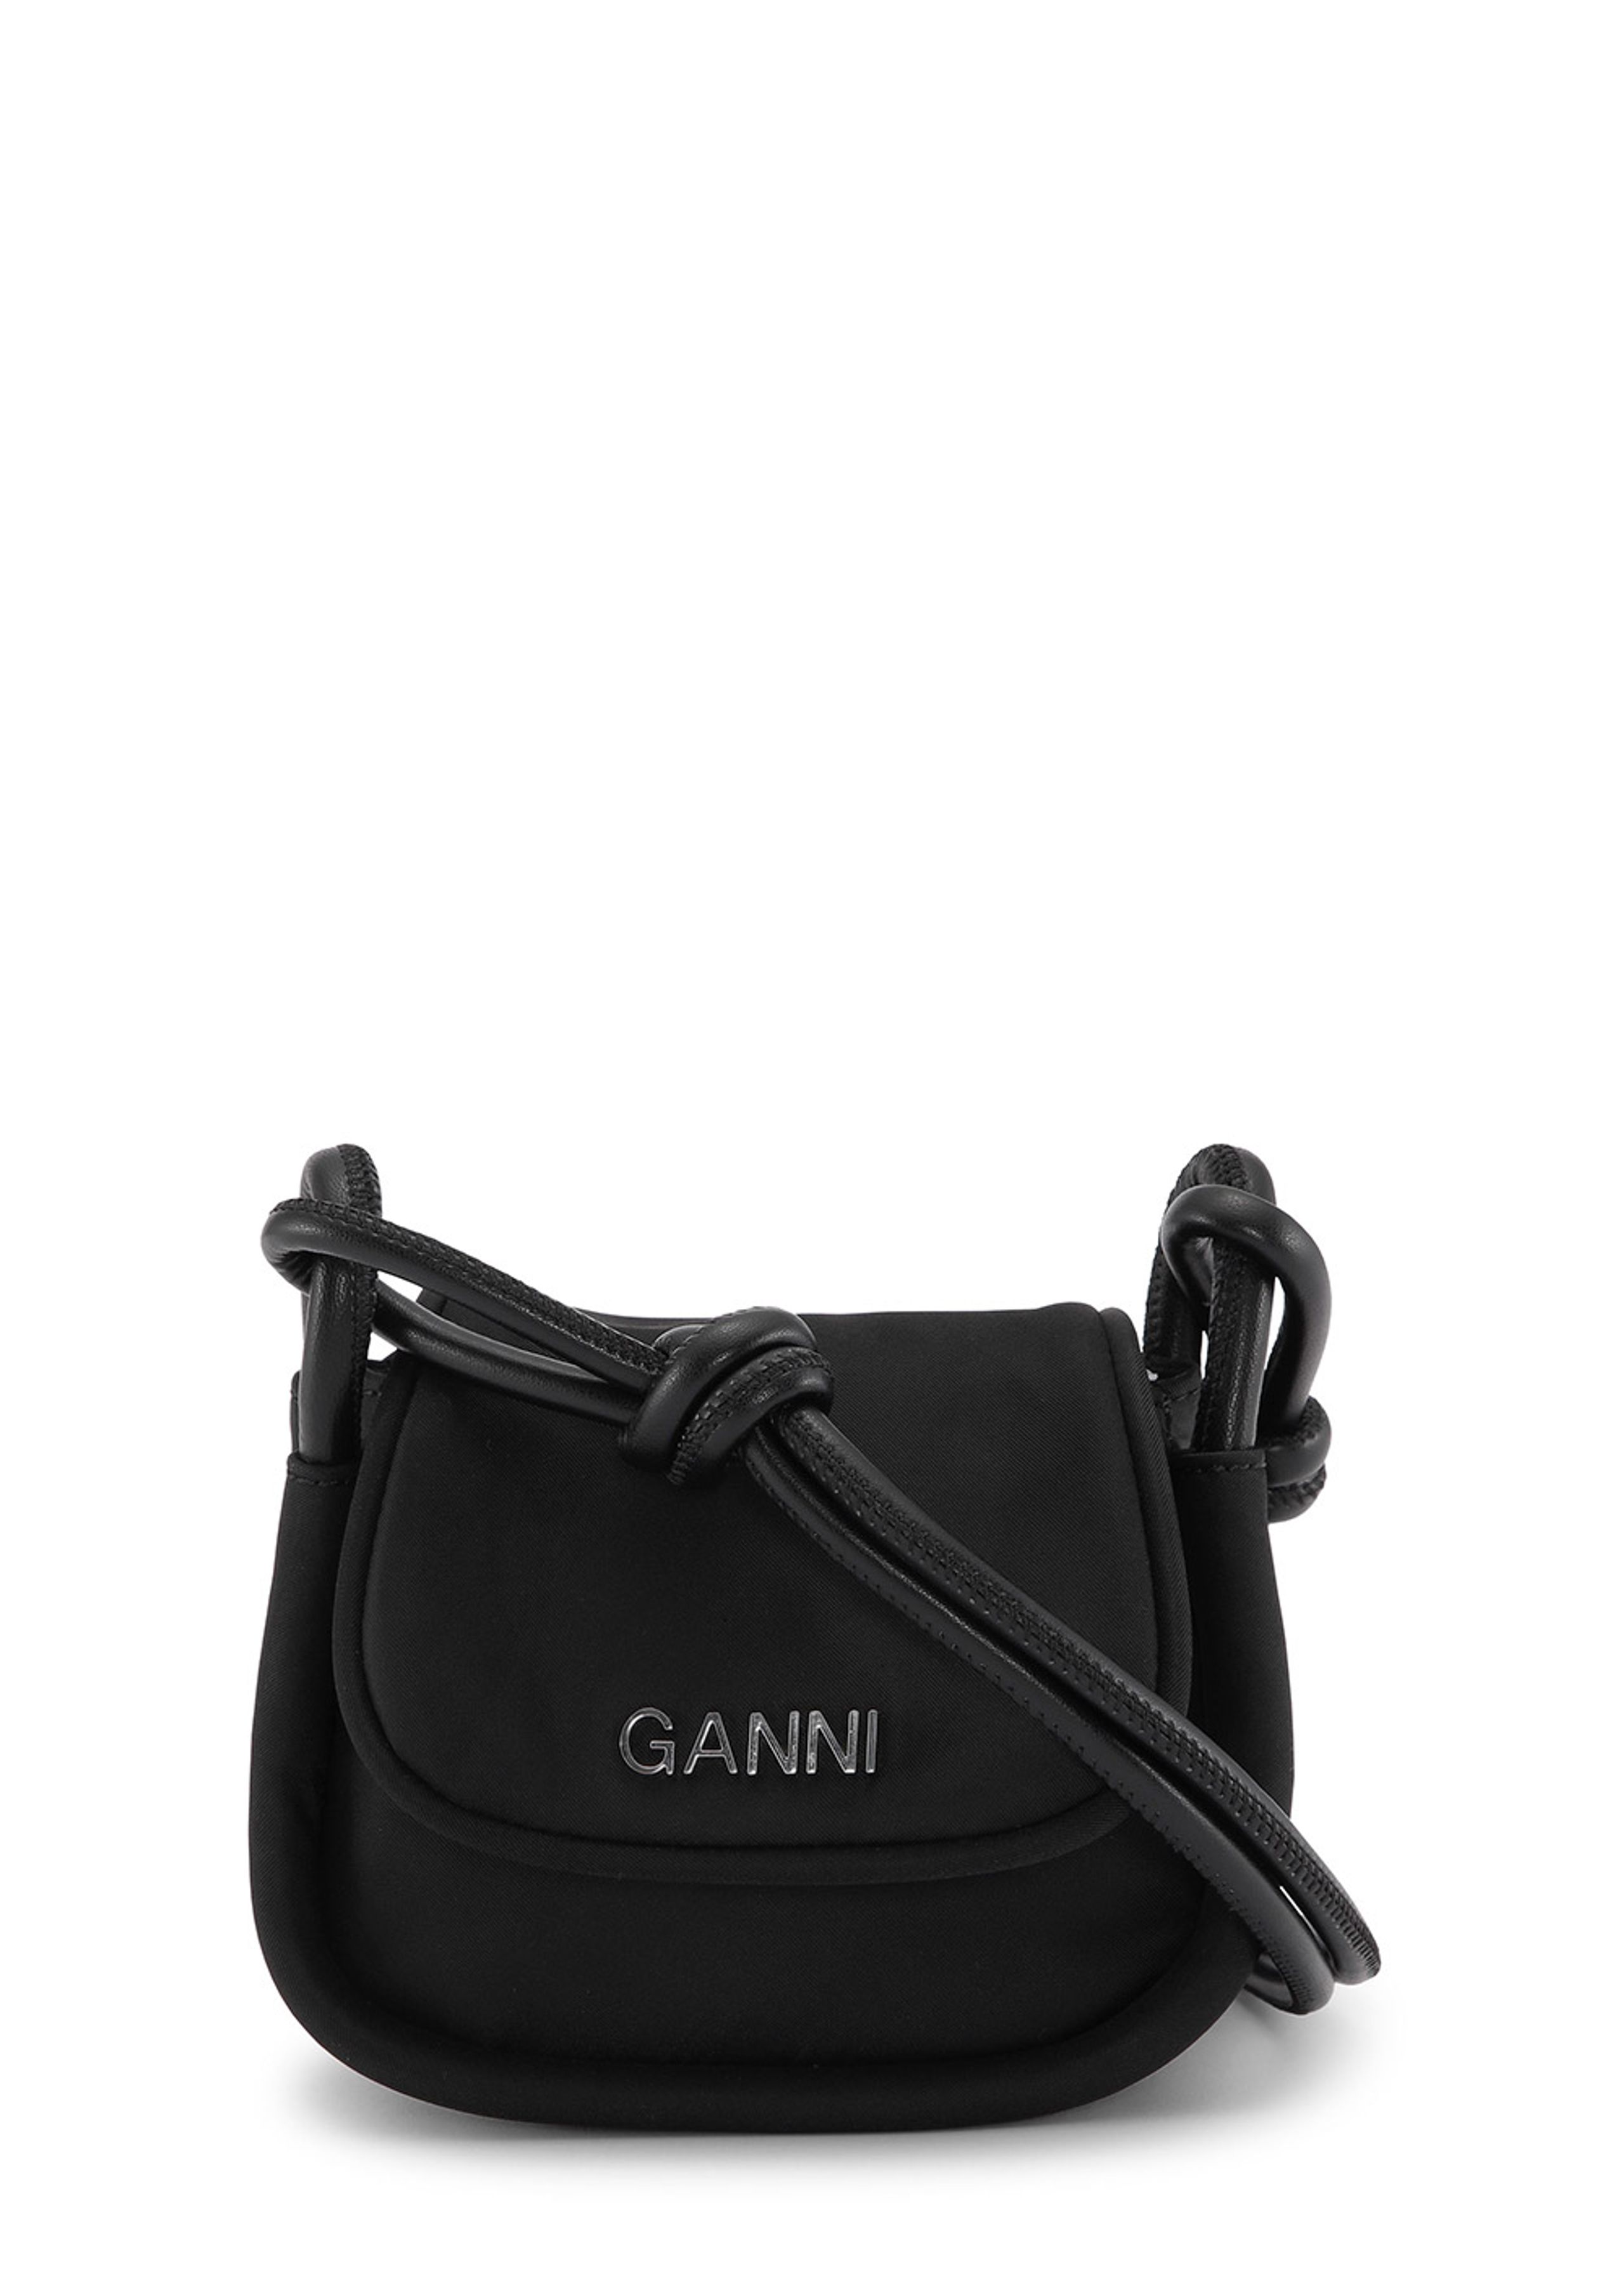 Ganni - Sac - Knot Mini Flap Over - Black